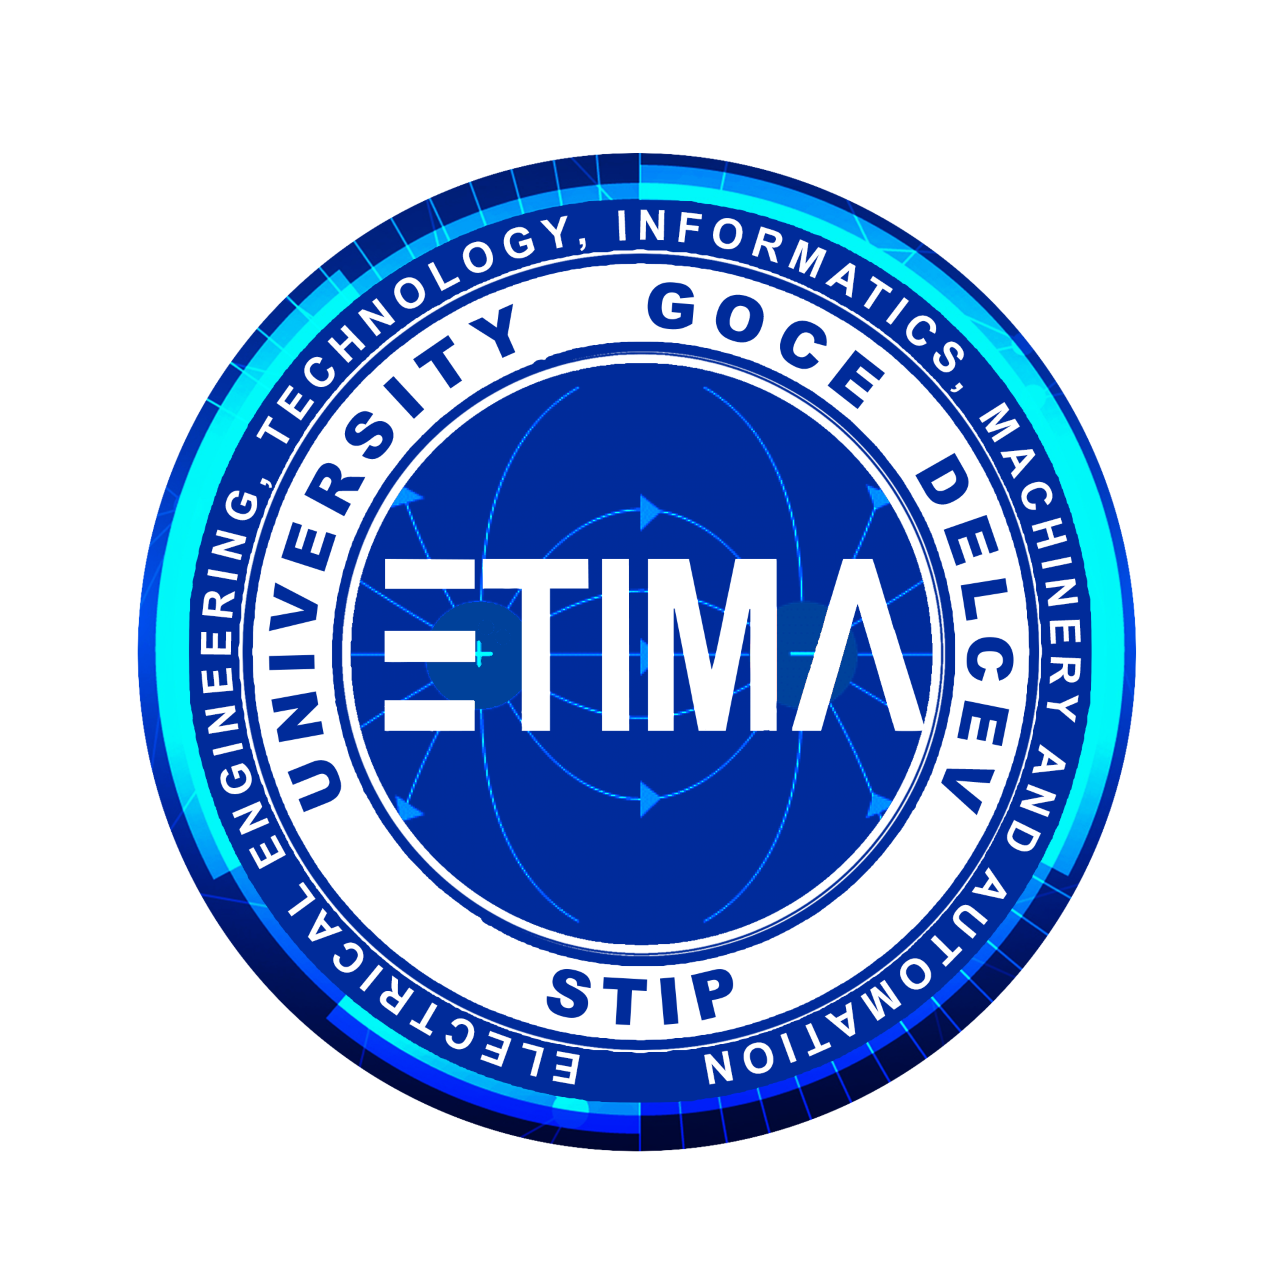 First International Conference ETIMA 2021